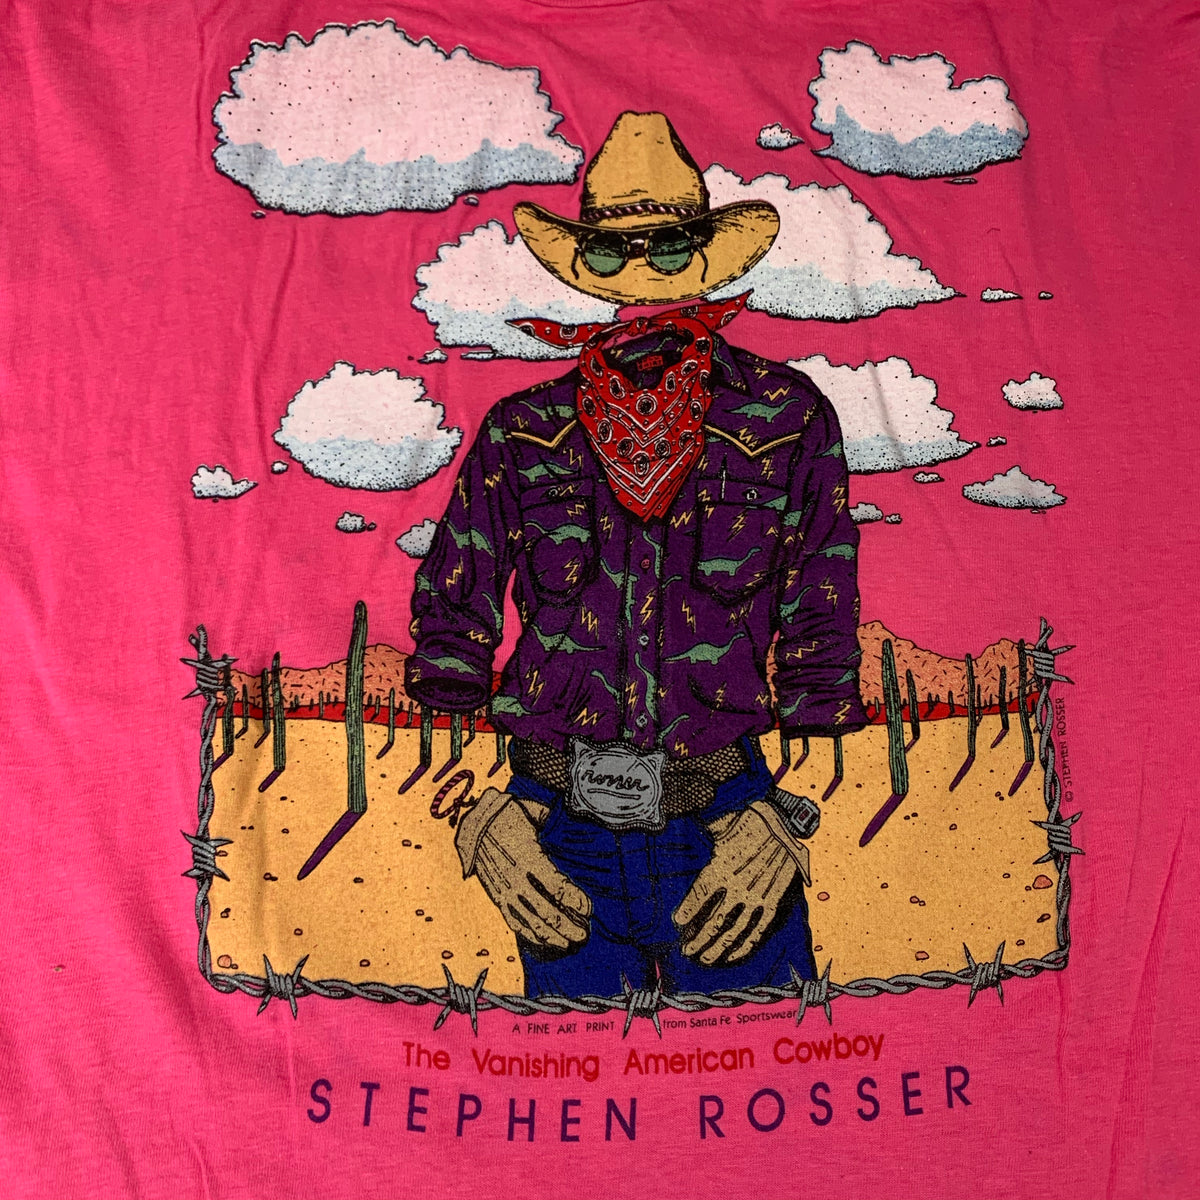 Vintage Stephen Rosser “The Vanishing American Cowboy” T-Shirt